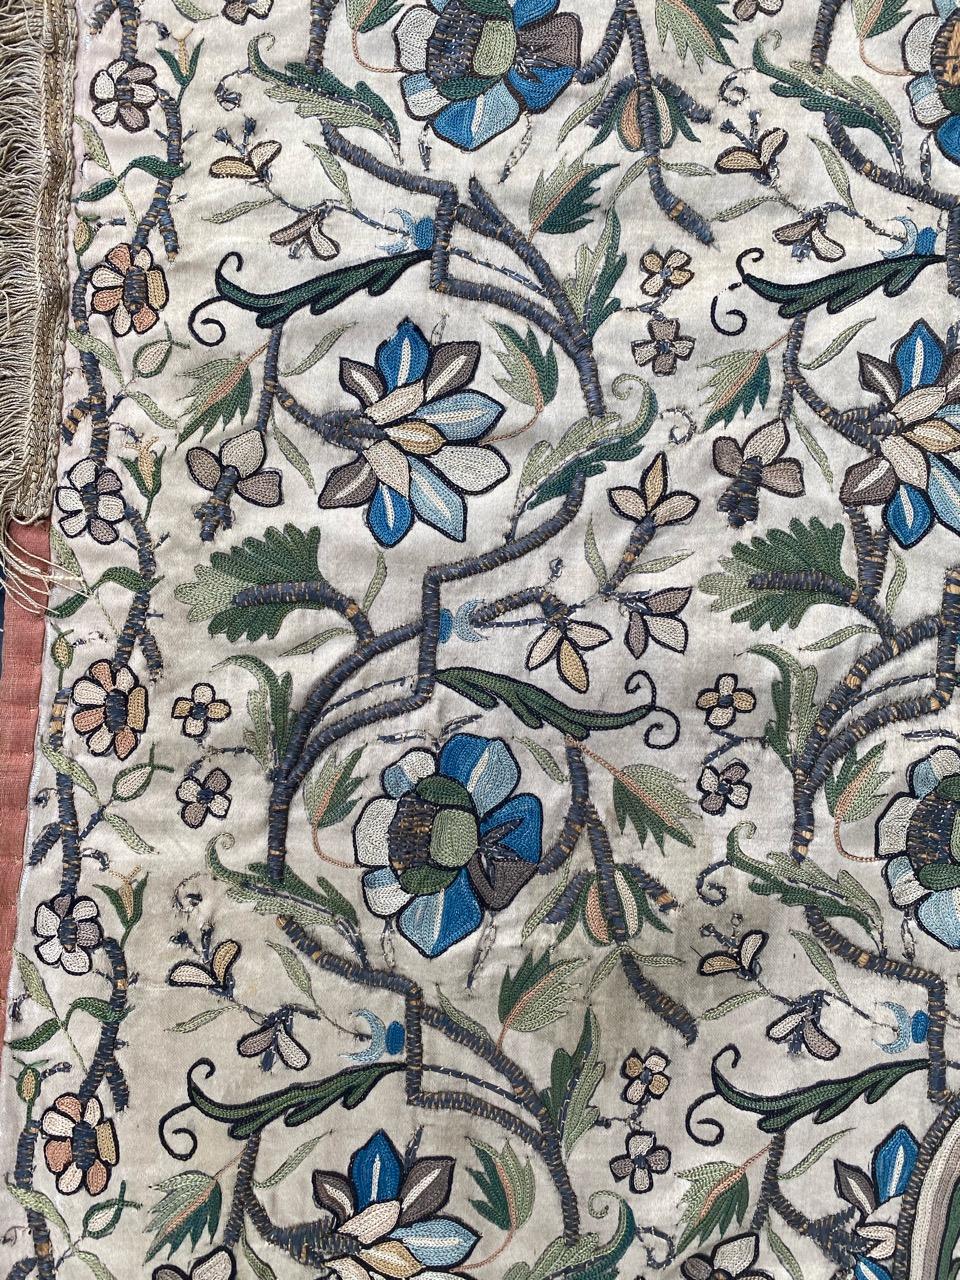 Bobyrug’s Wonderful Antique Turkish Ottoman Embroidery 6